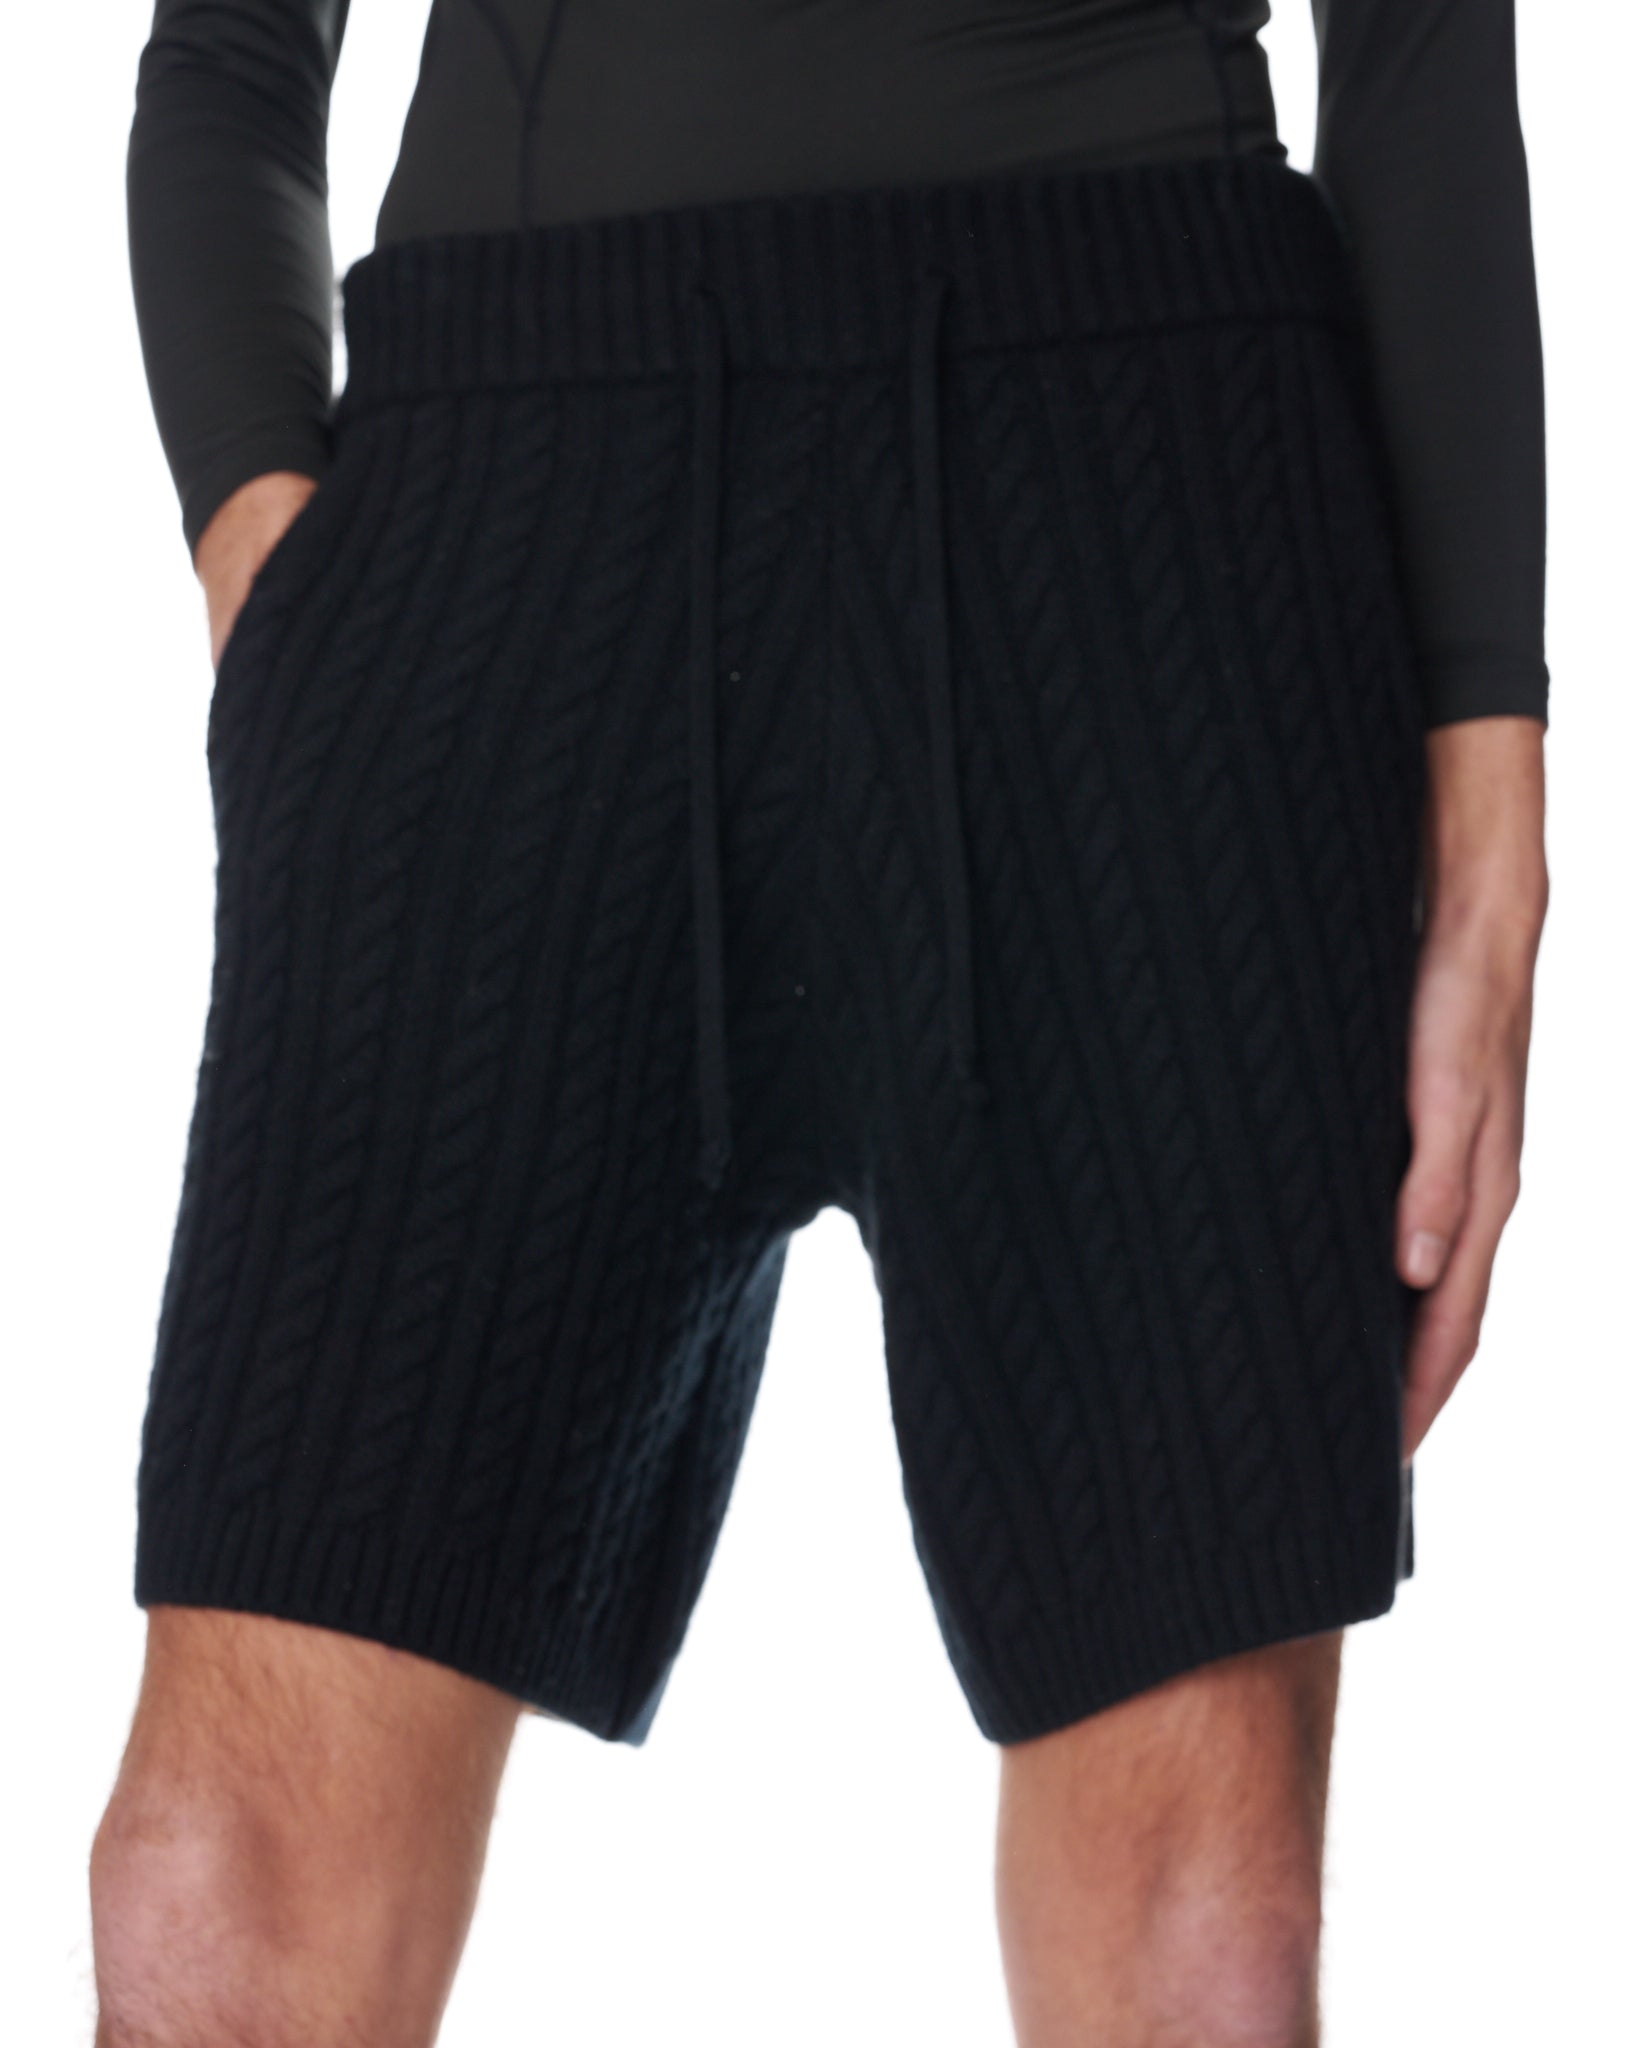 Cable Knit Basketball Shorts